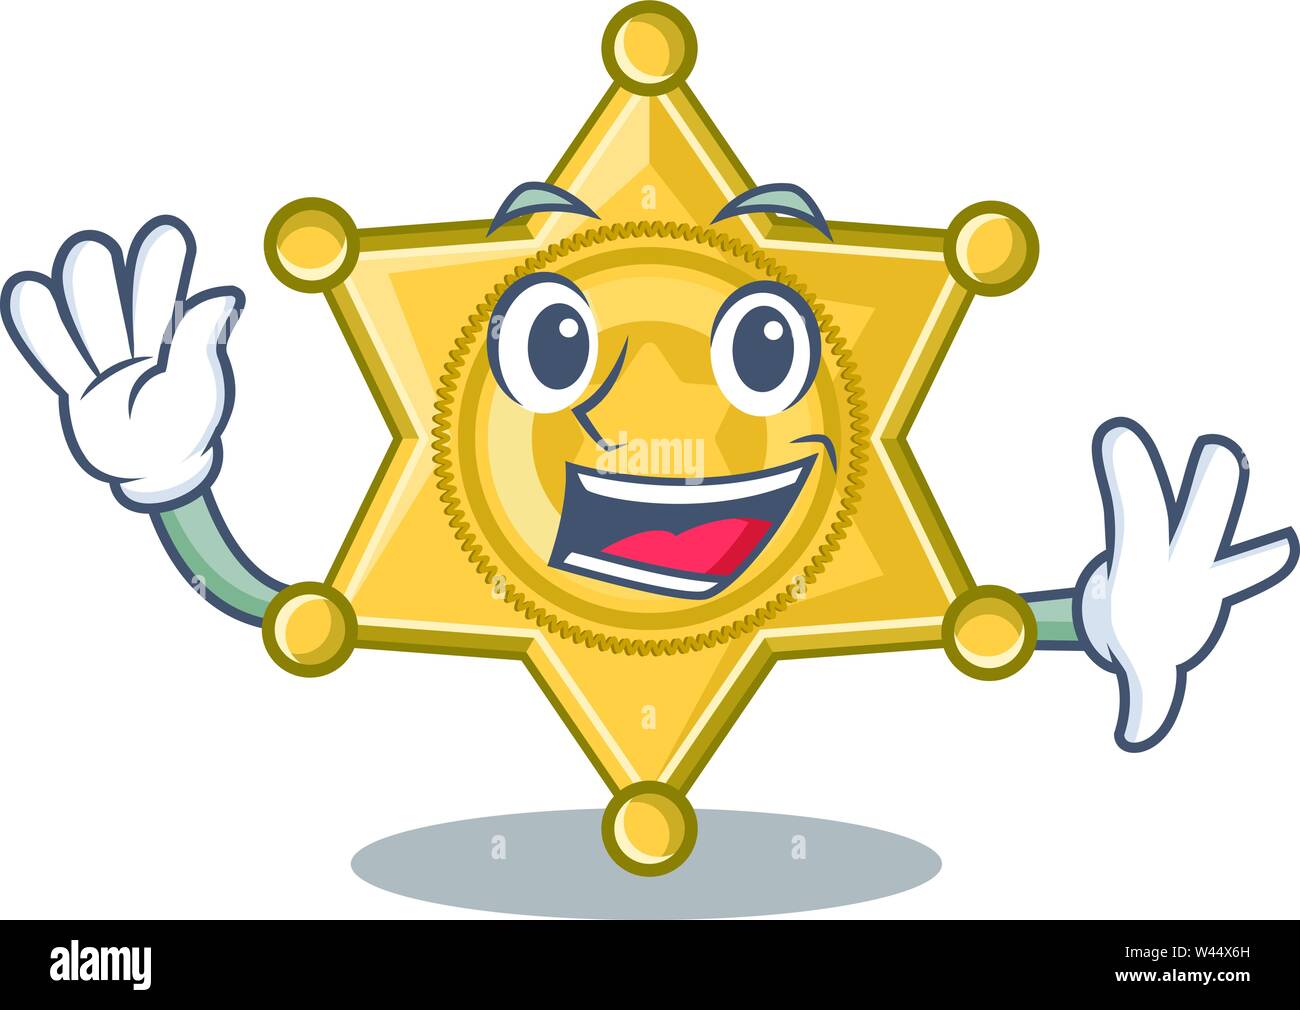 Waving star badge police on a cartoon vector illustration Stock Vector